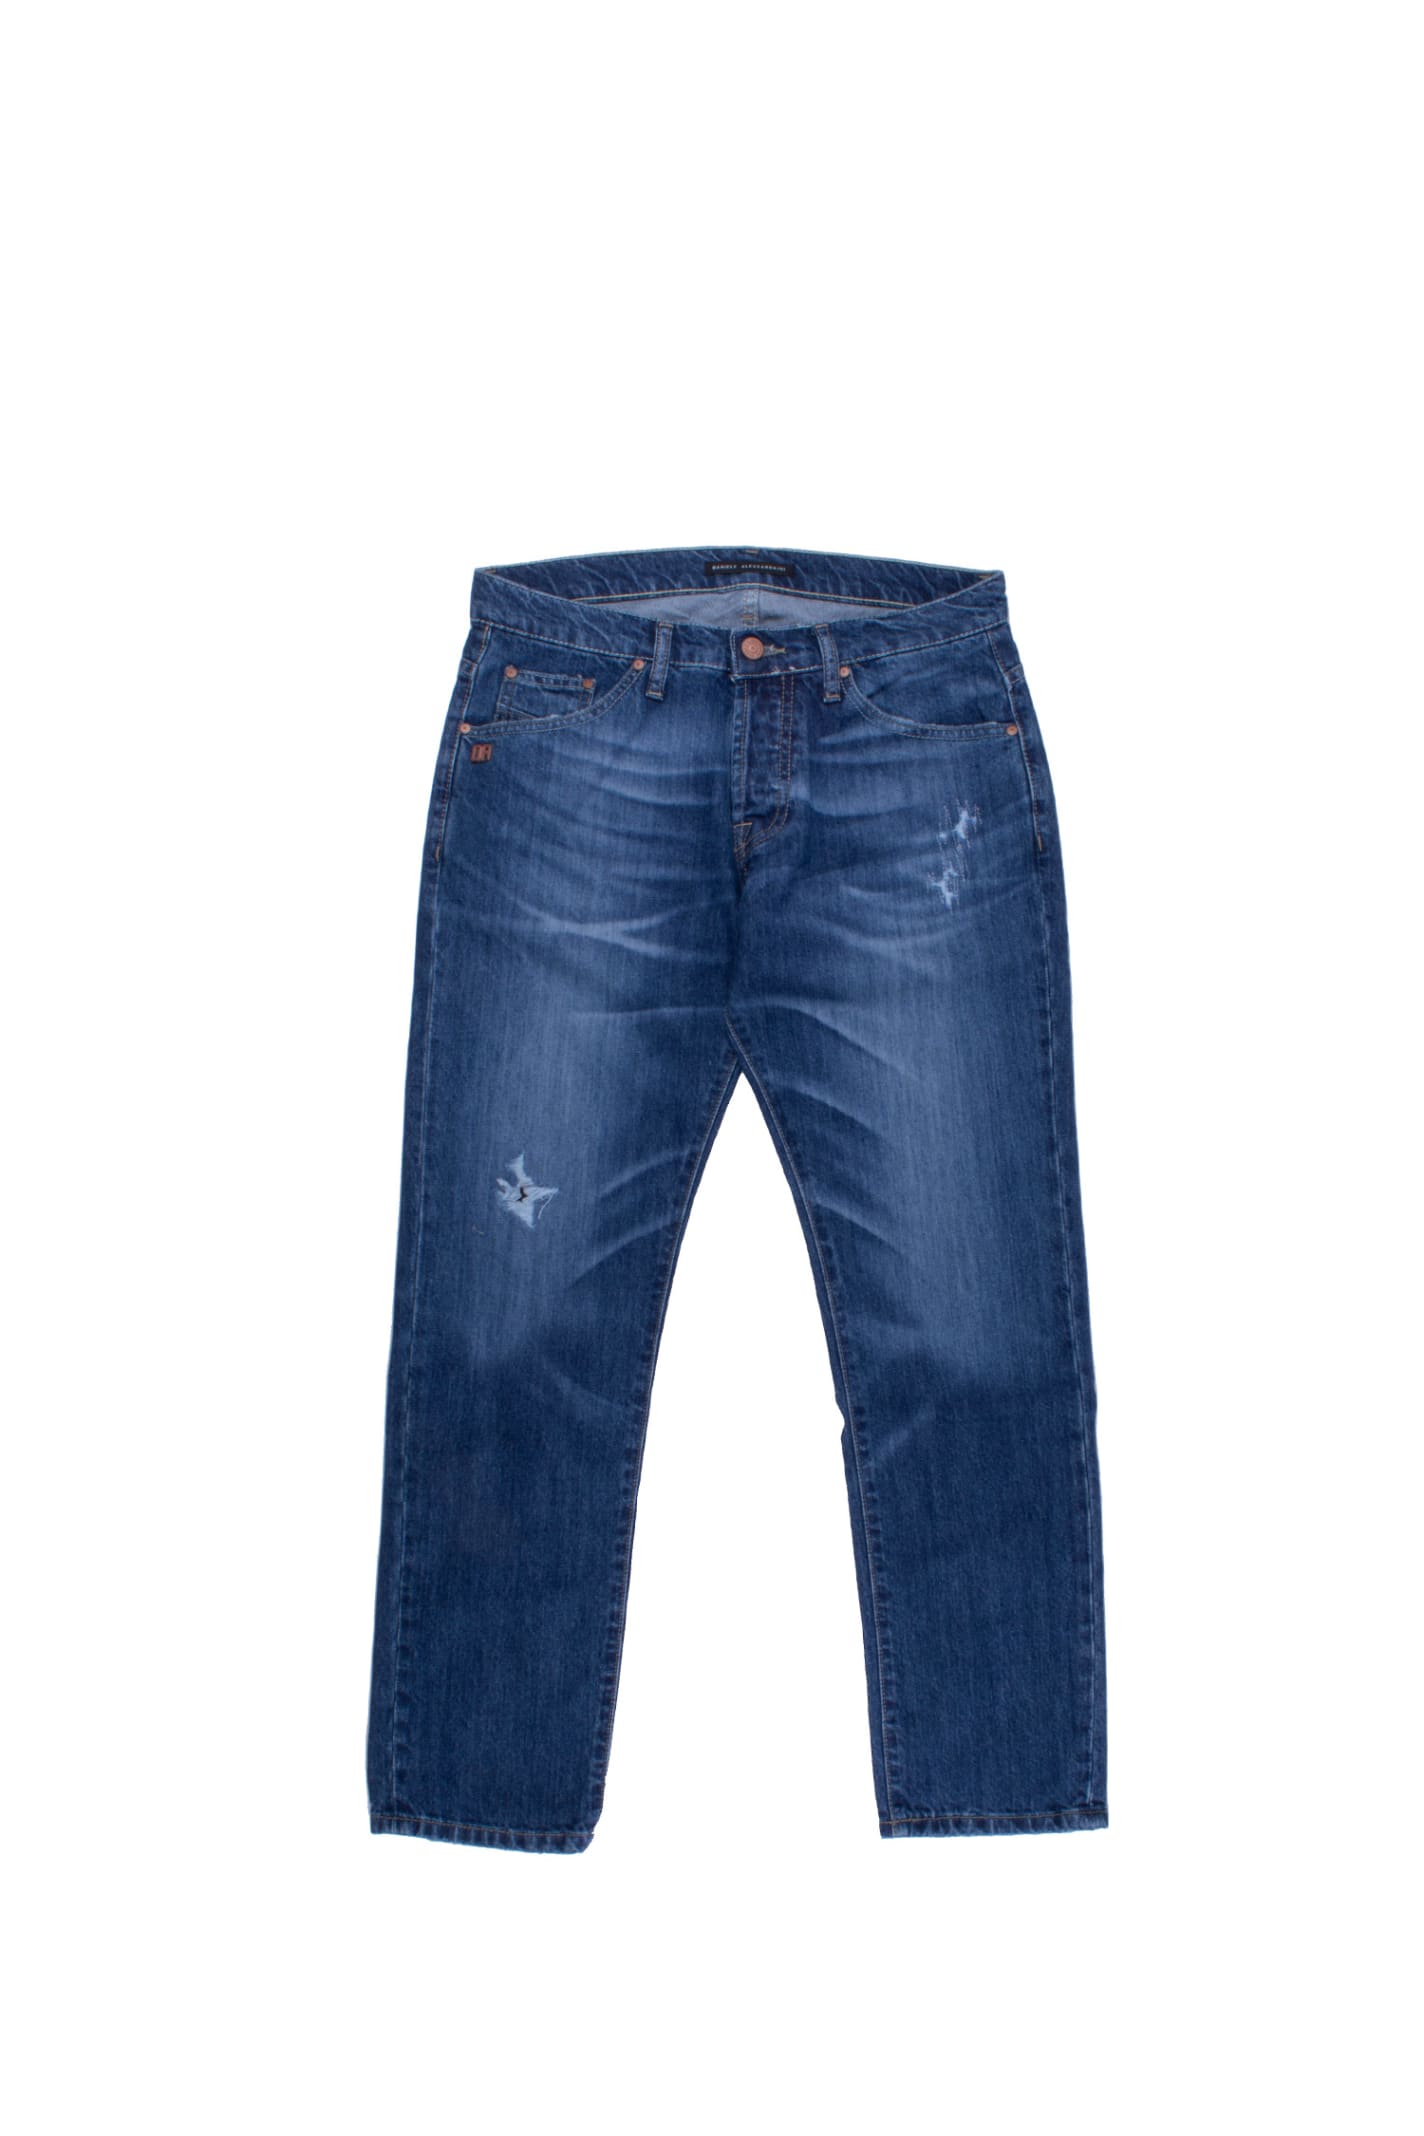 Daniele Alessandrini Cotton Jeans